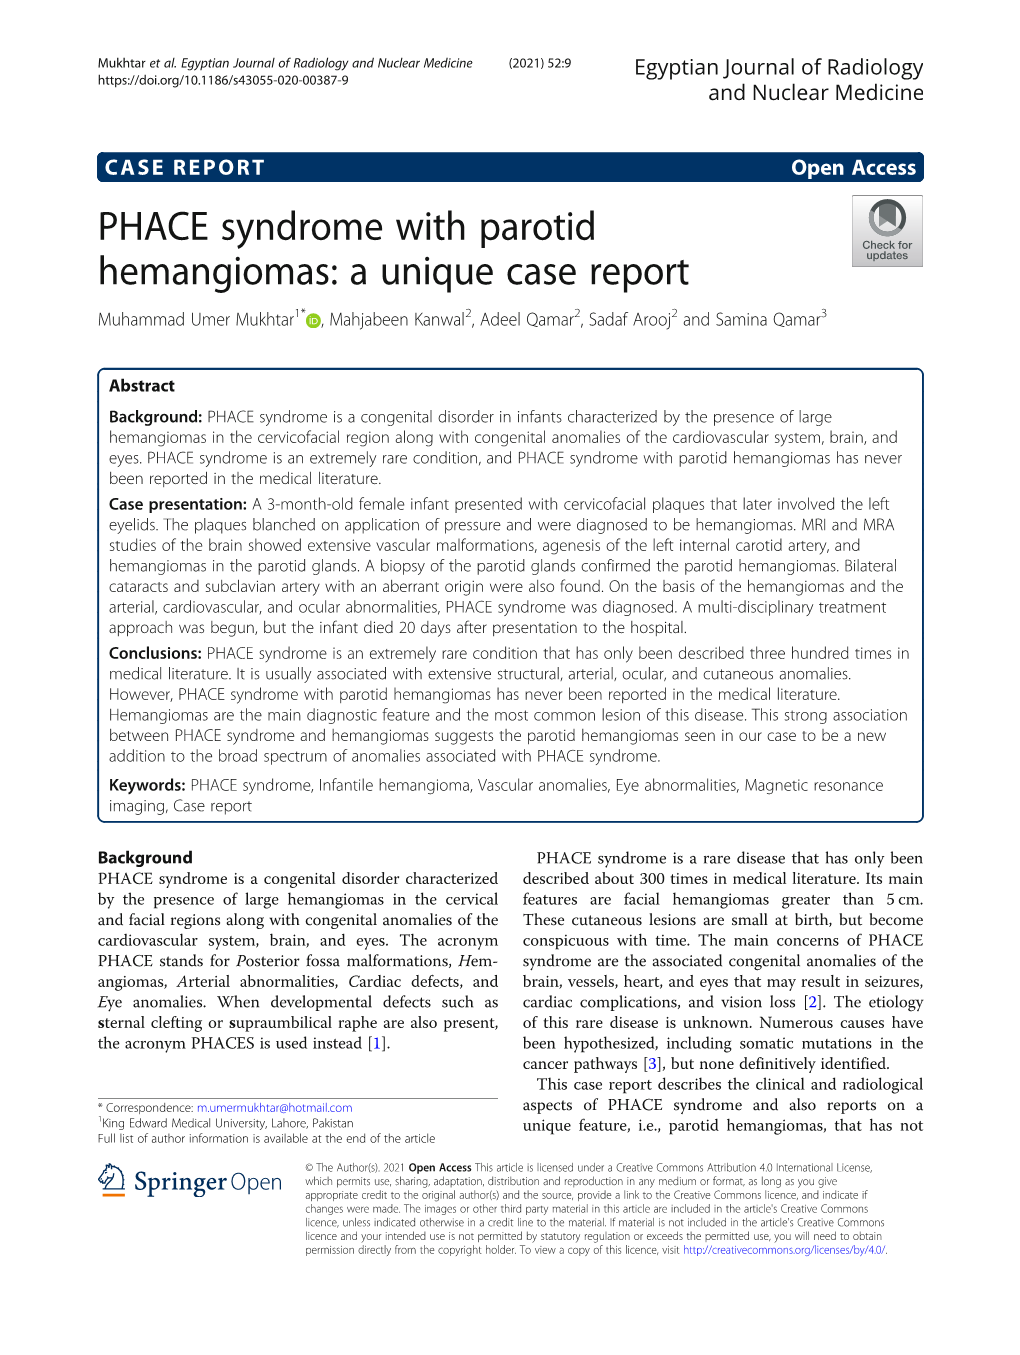 PHACE Syndrome with Parotid Hemangiomas: a Unique Case Report Muhammad Umer Mukhtar1* , Mahjabeen Kanwal2, Adeel Qamar2, Sadaf Arooj2 and Samina Qamar3